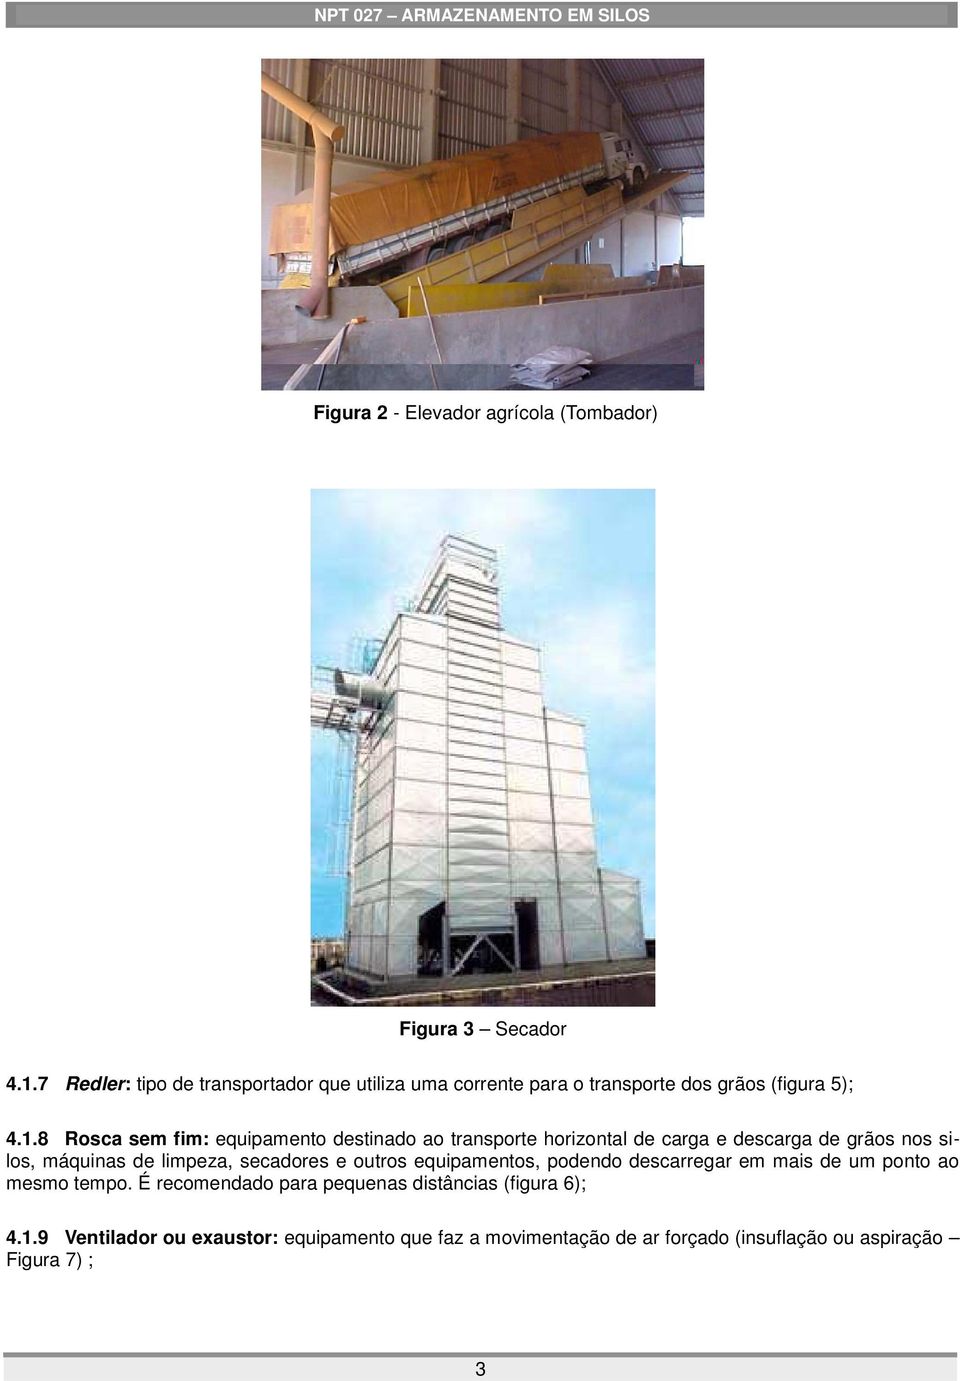 8 Rosca sem fim: equipamento destinado ao transporte horizontal de carga e descarga de grãos nos silos, máquinas de limpeza, secadores